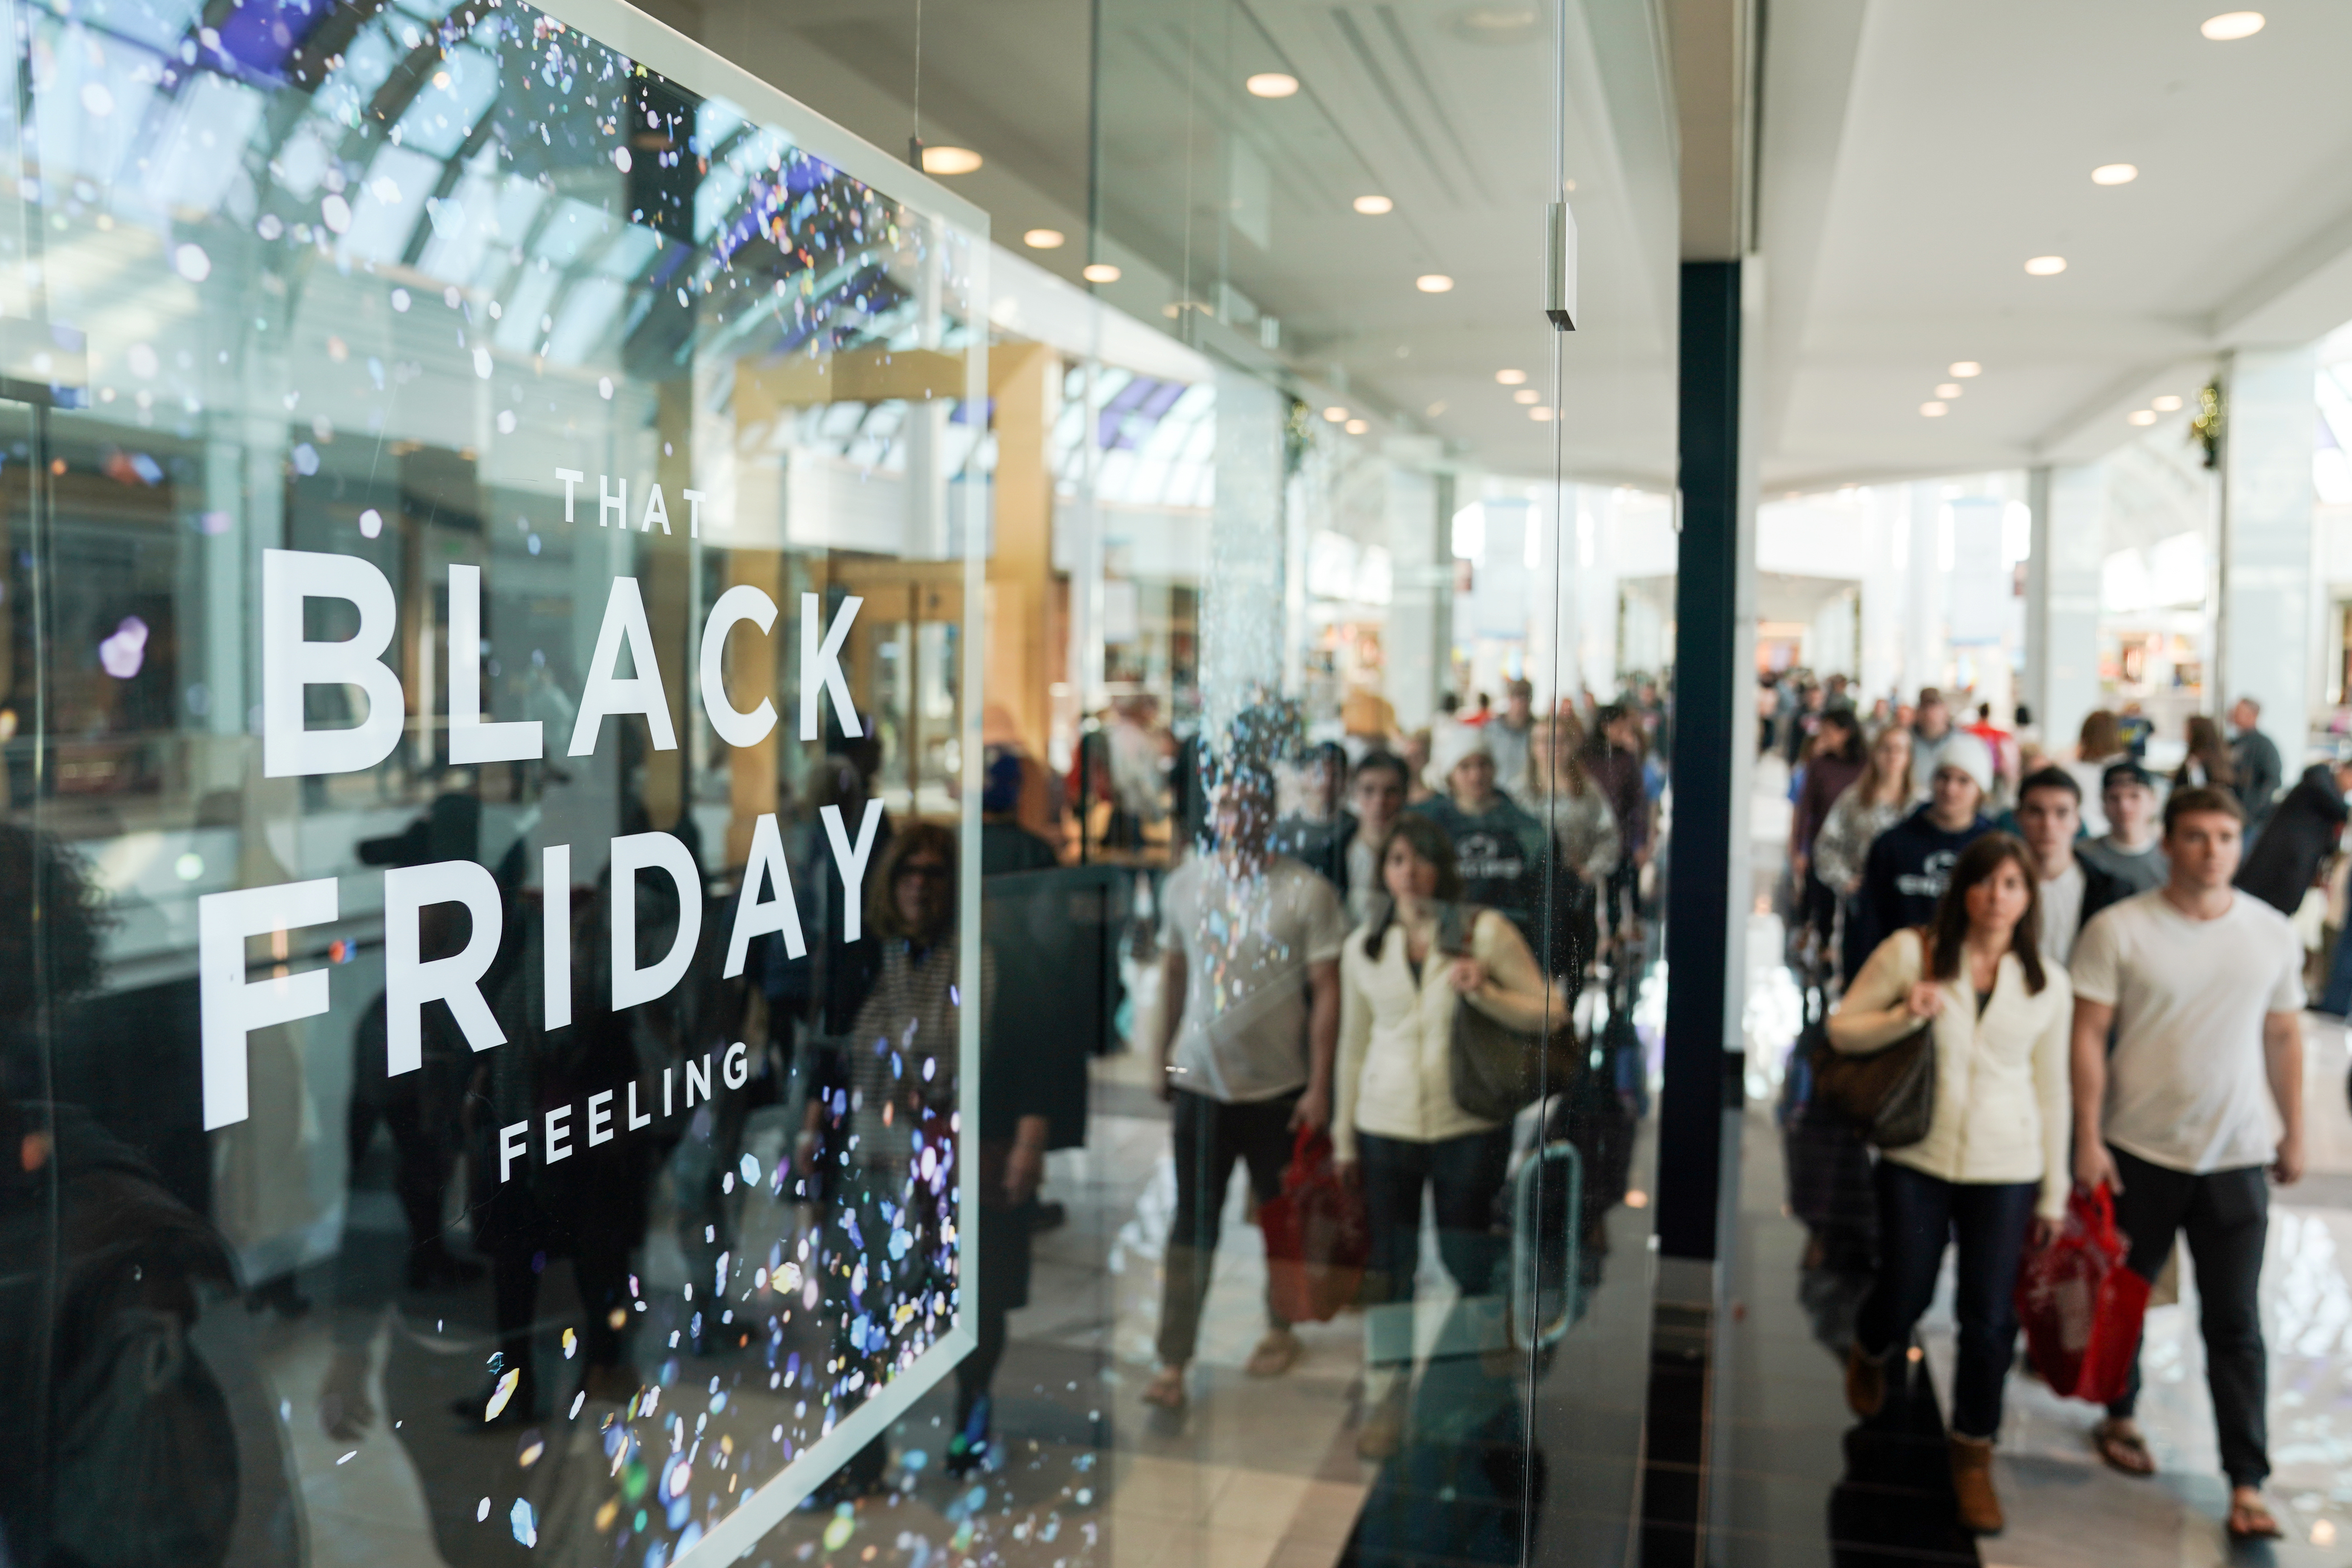 Festive Mall Sales At 80% Of Last Year, Sustaining: Prestige's